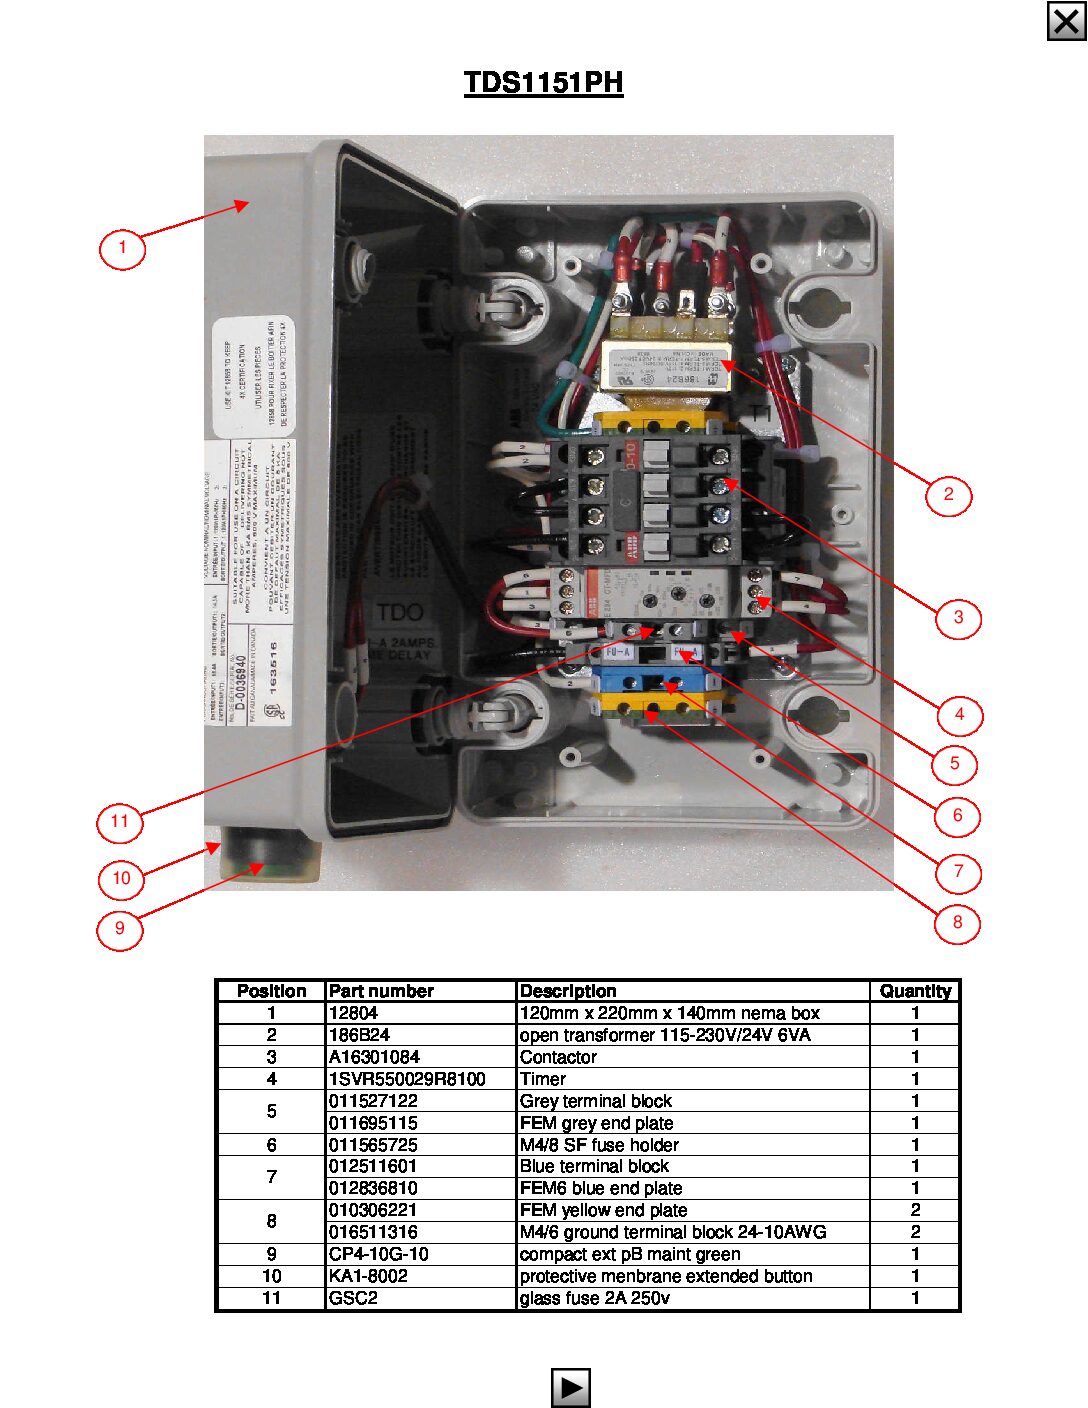 TDS1151PH Parts Breakdown